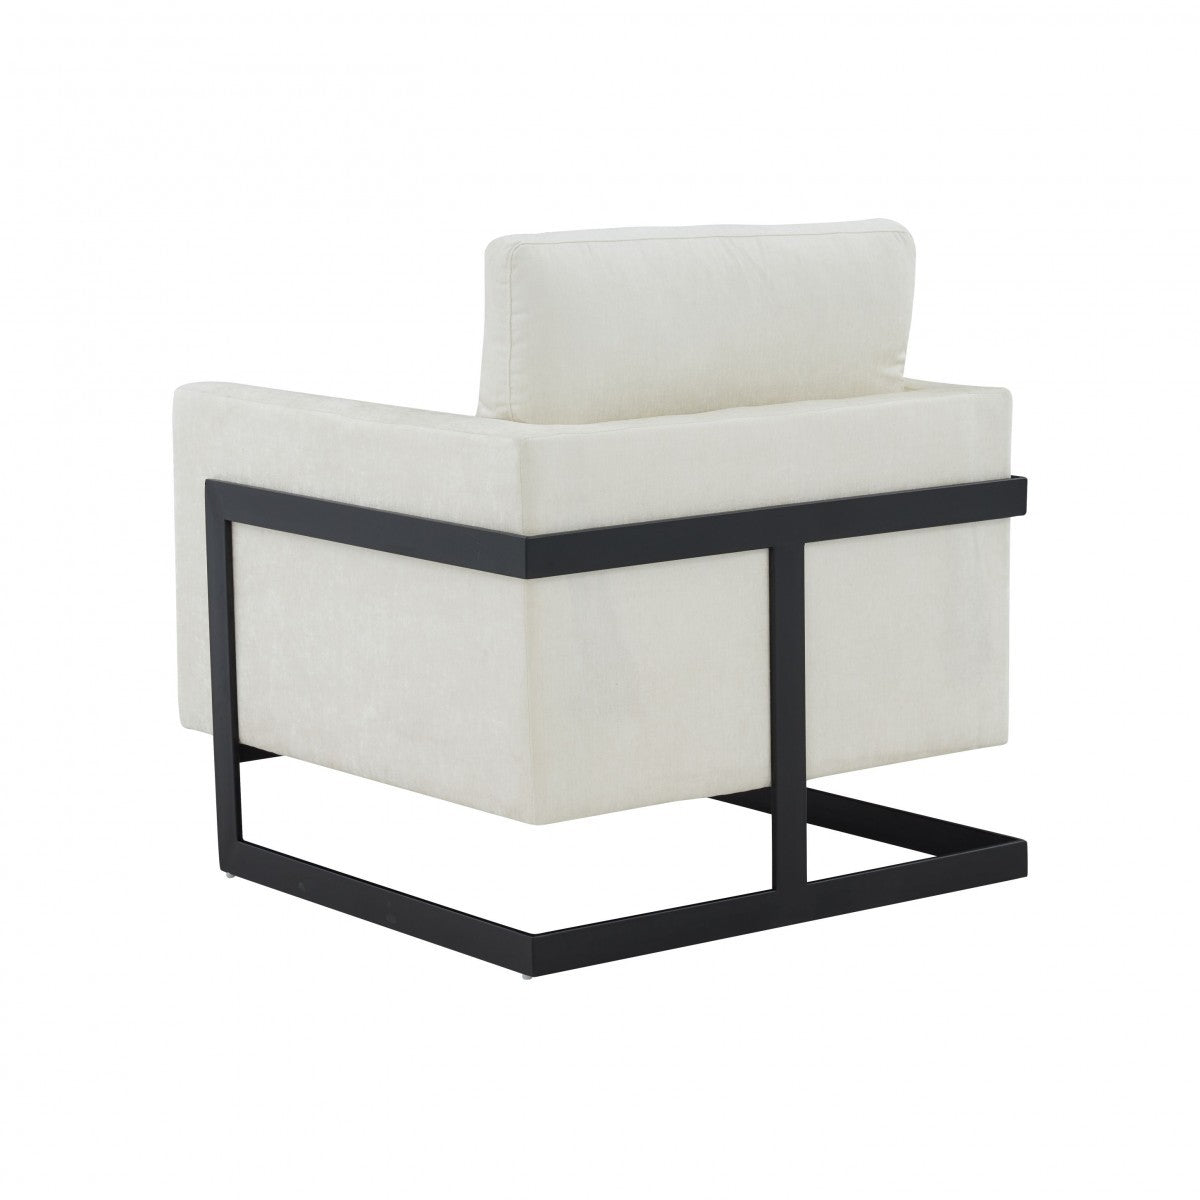 31" Cream And Black Fabric Club Chair